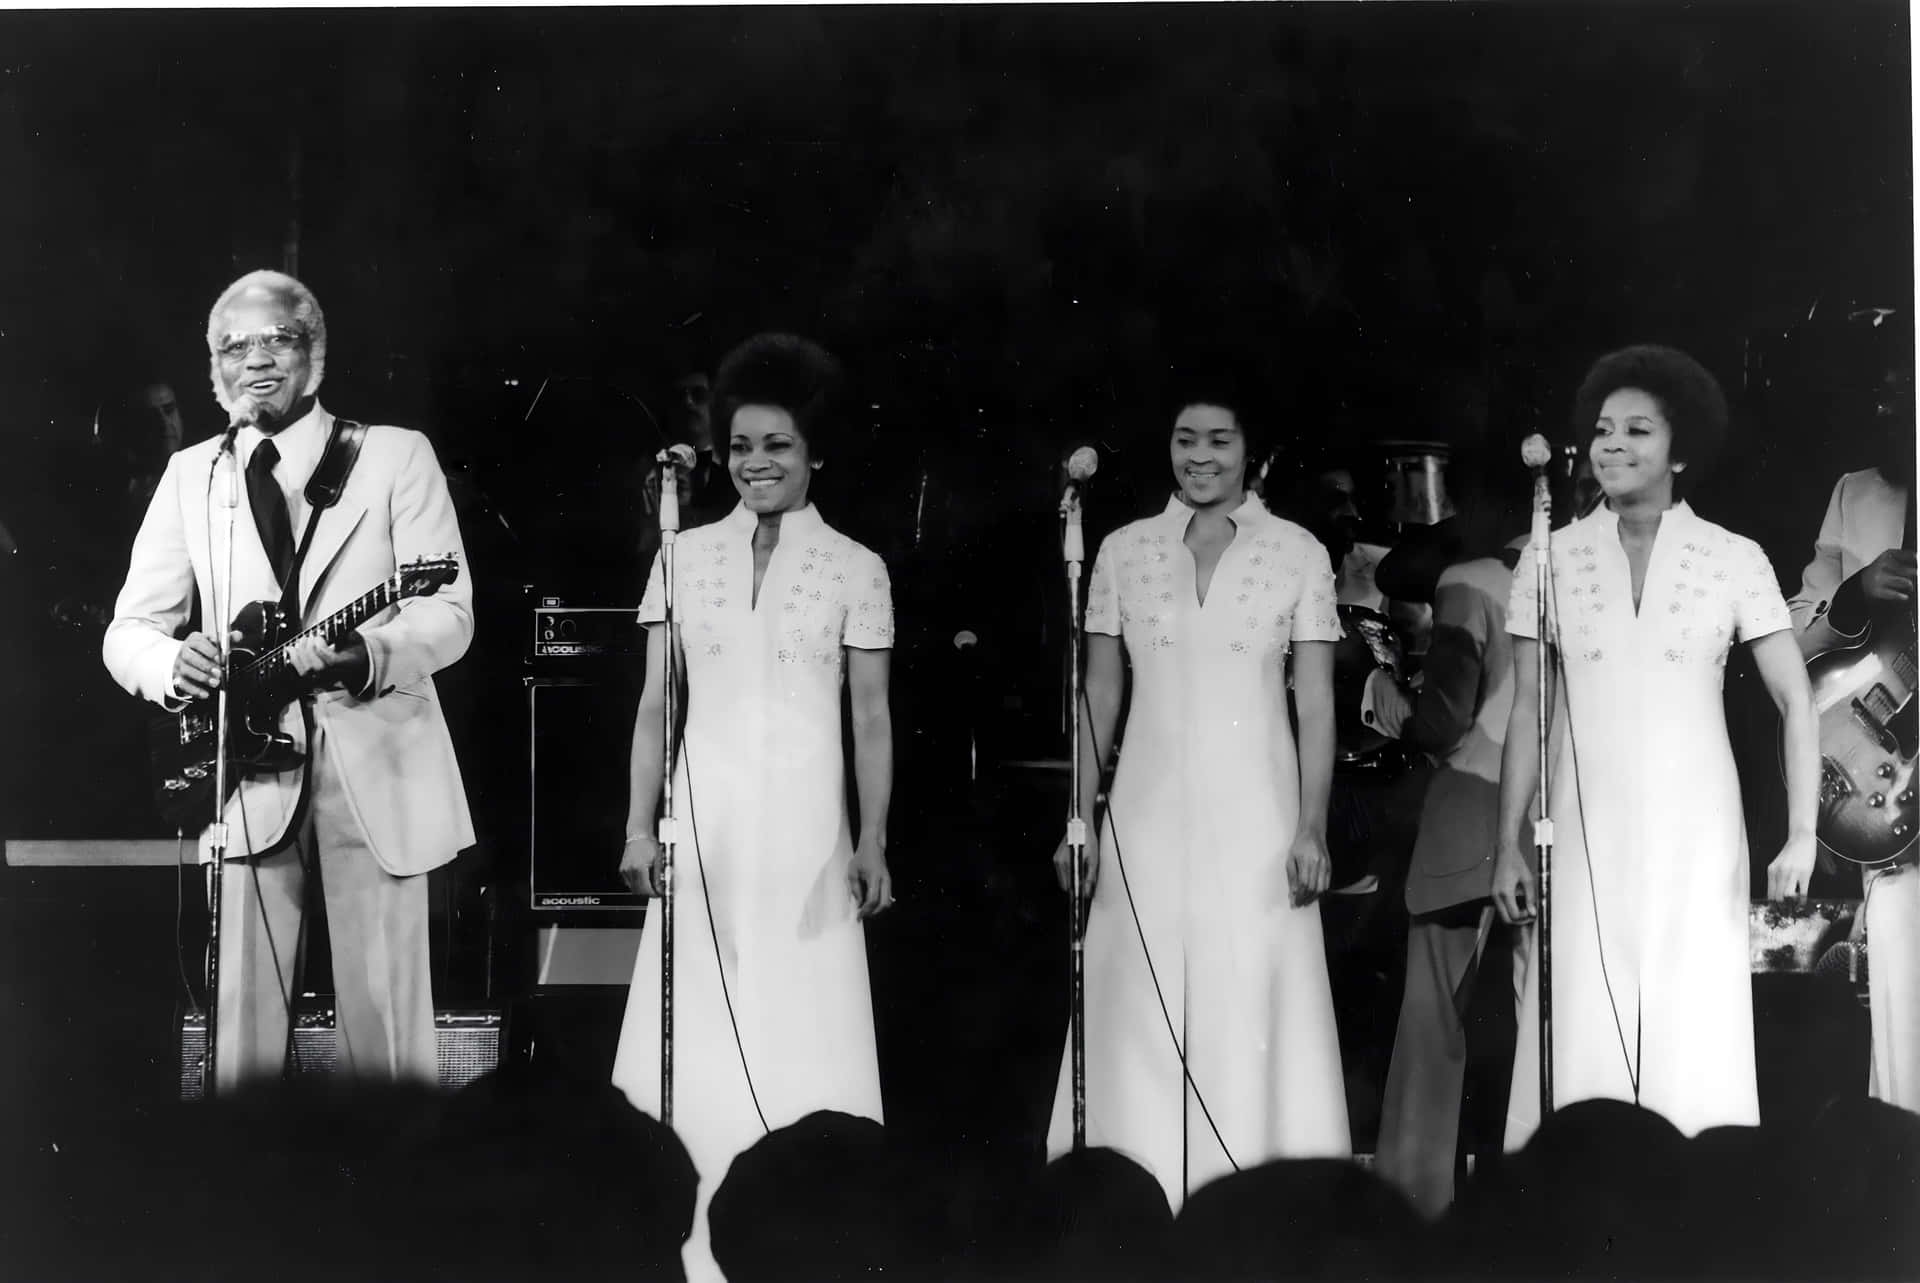 American Staple Singers 1970 Concert Photograph Wallpaper